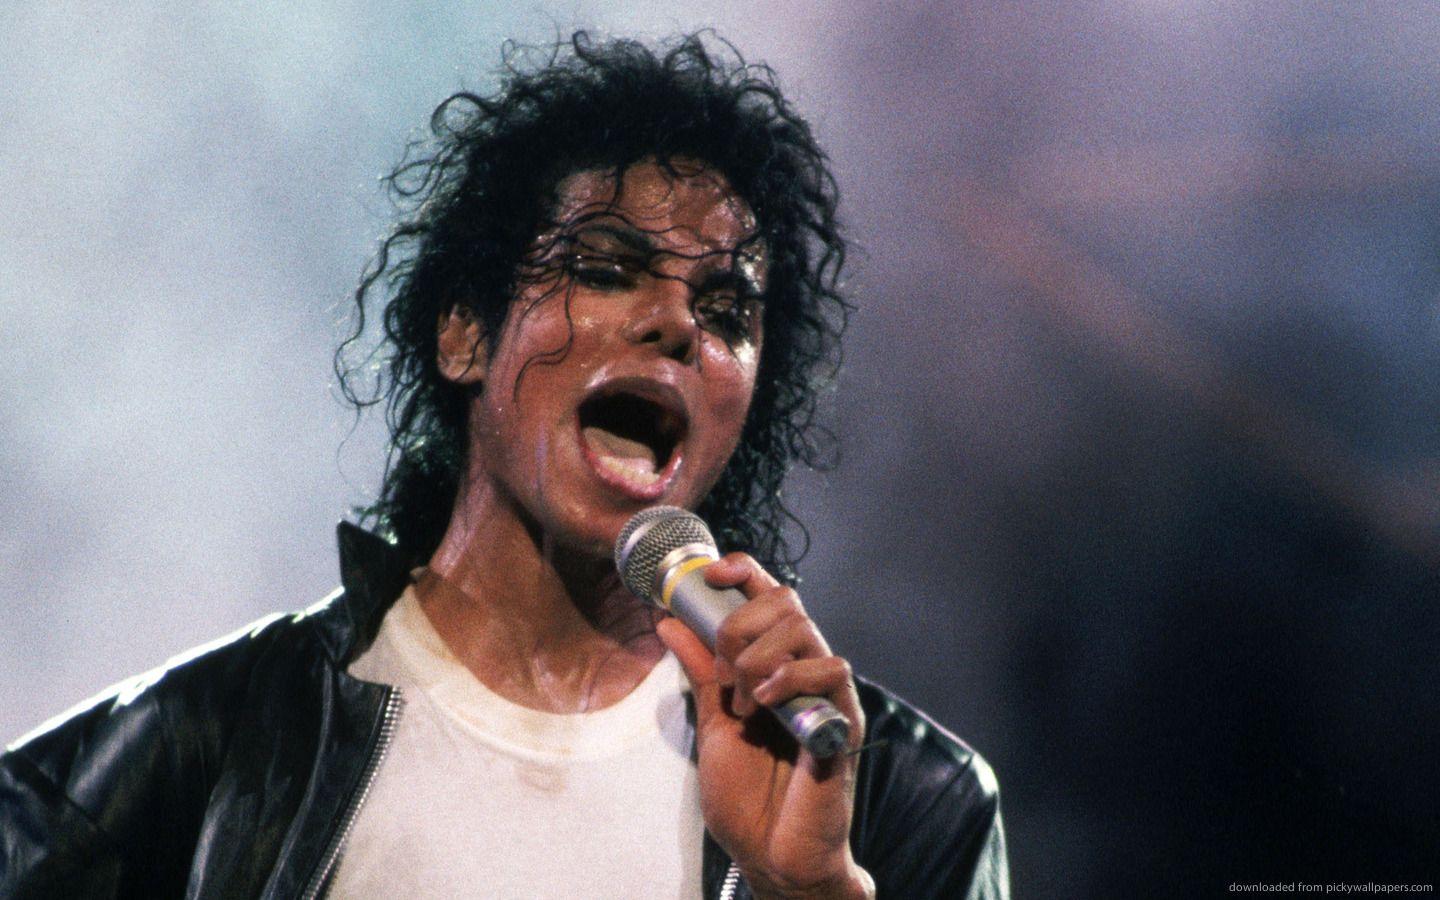 Download 1440x900 Michael Jackson Singing Wallpapers